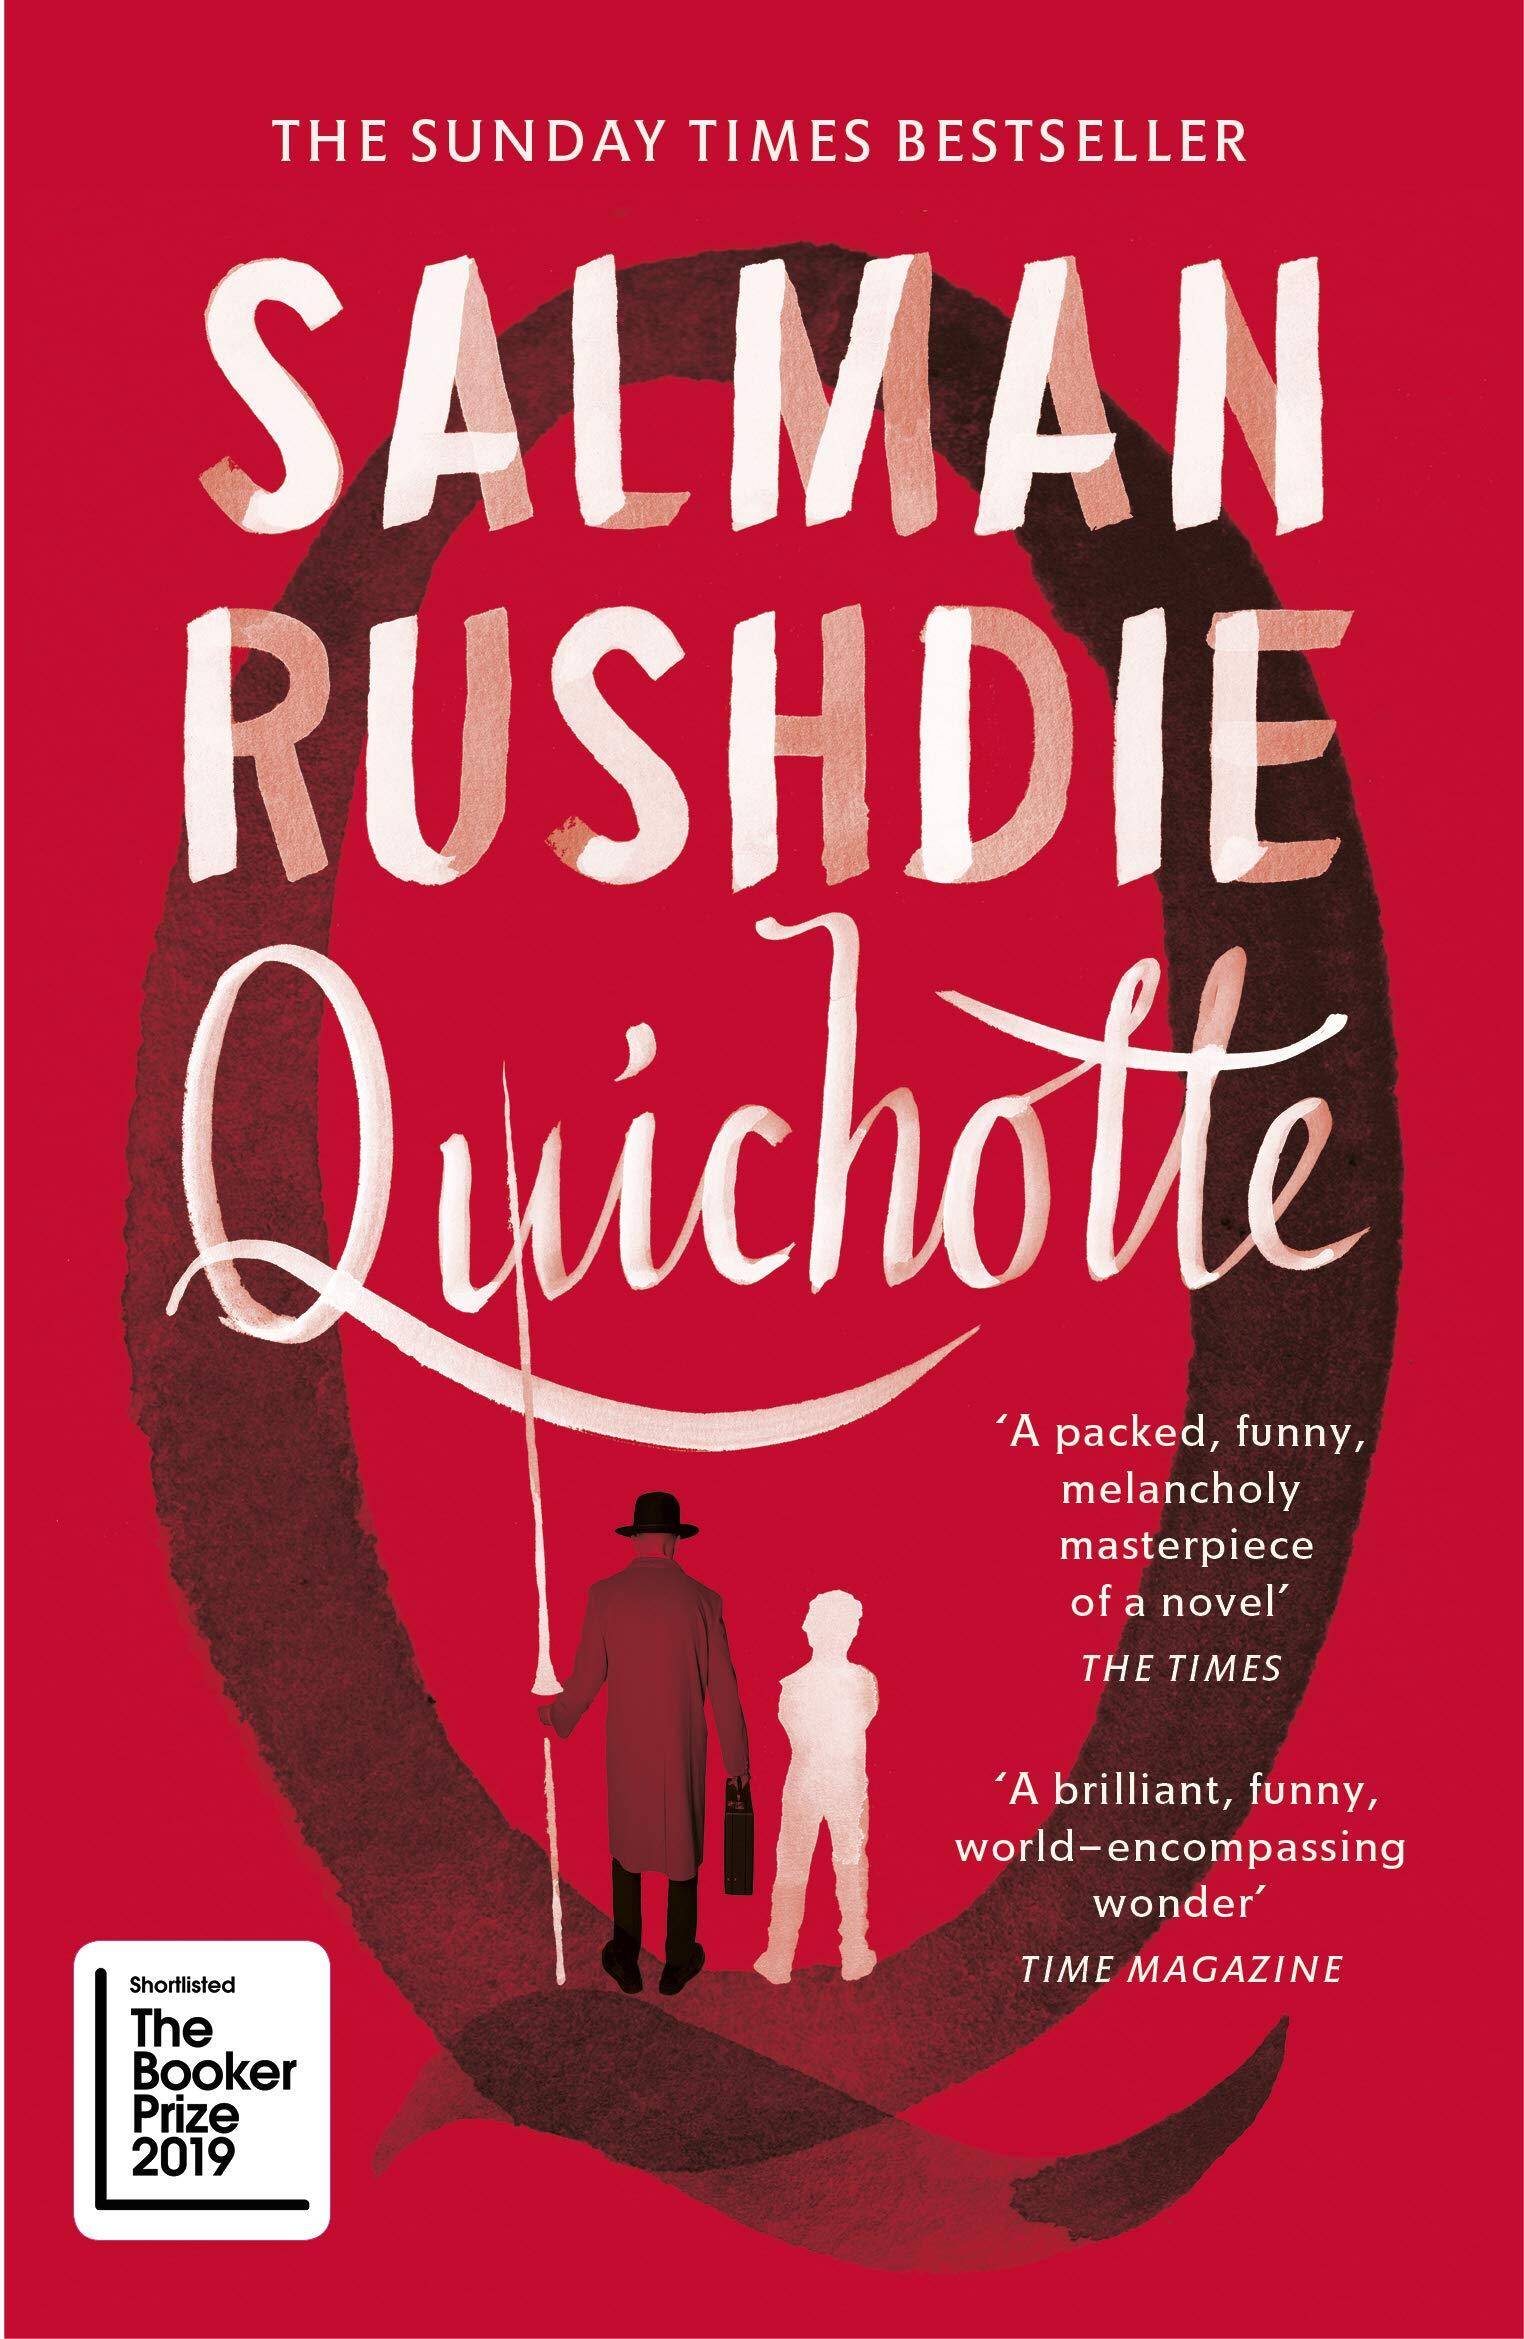 Quichotte/Rushdie